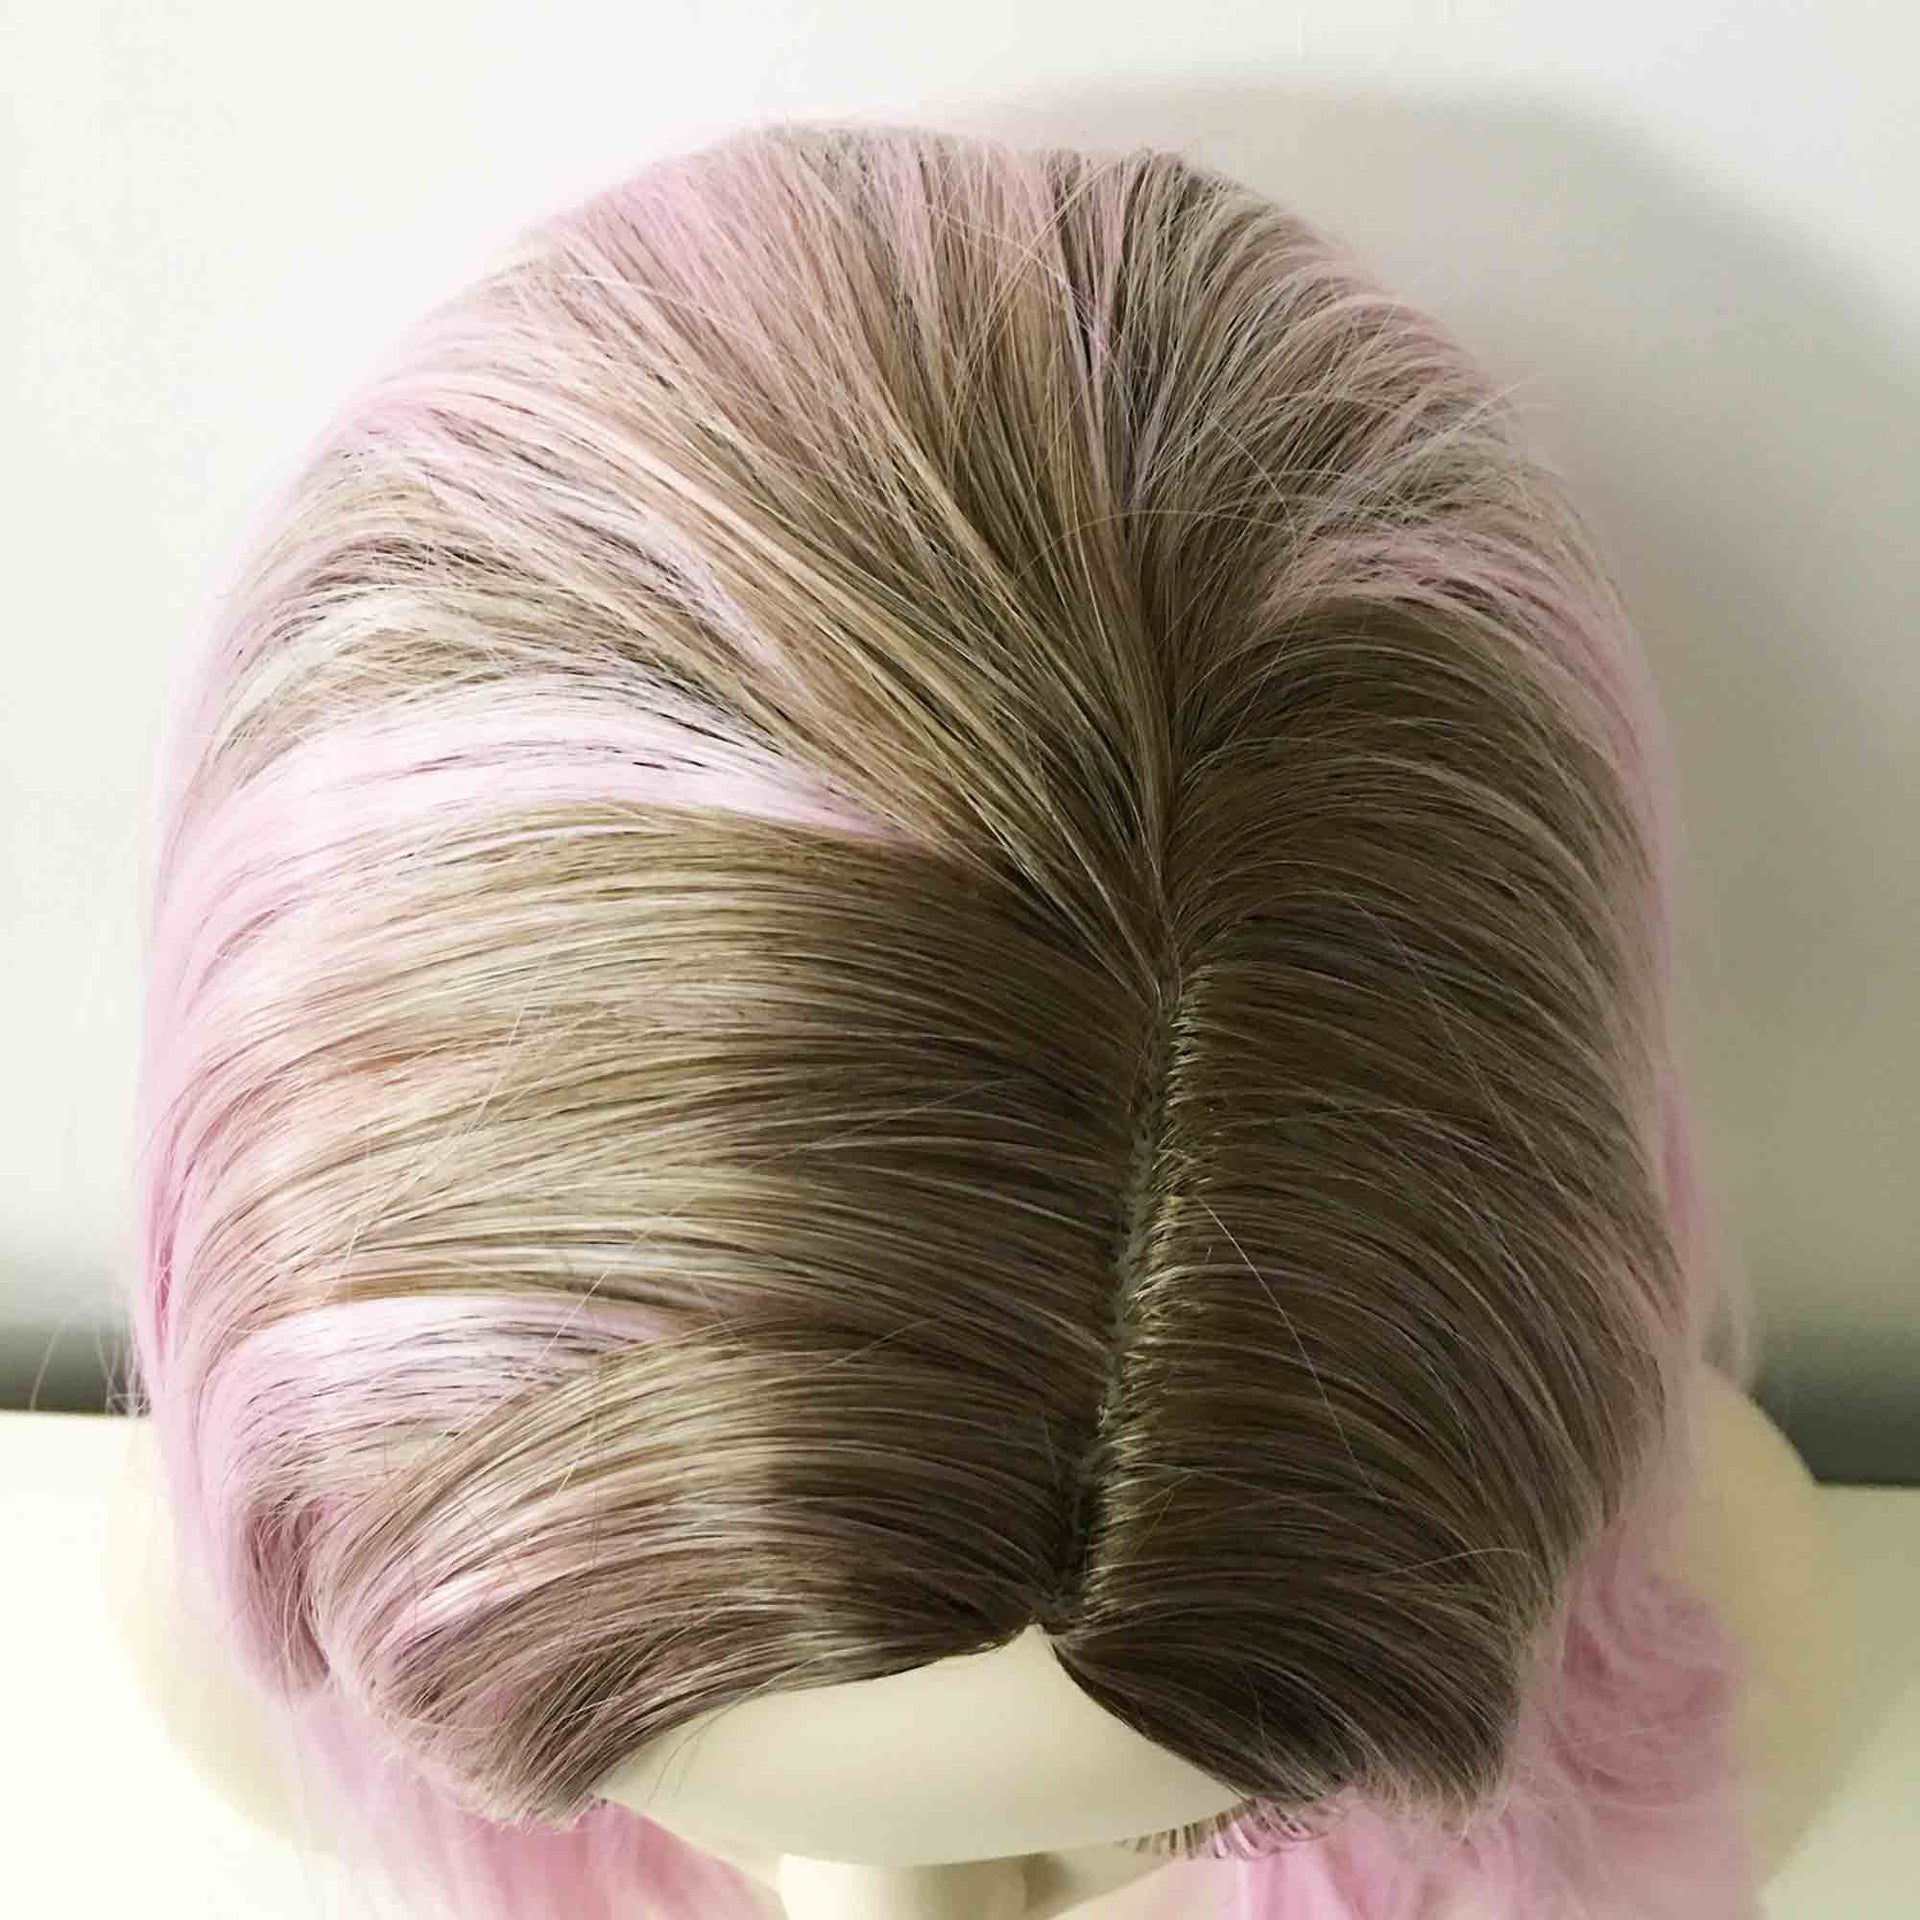 nevermindyrhead Women Ombre Pink Medium Length Natural Curls Side Part Wig